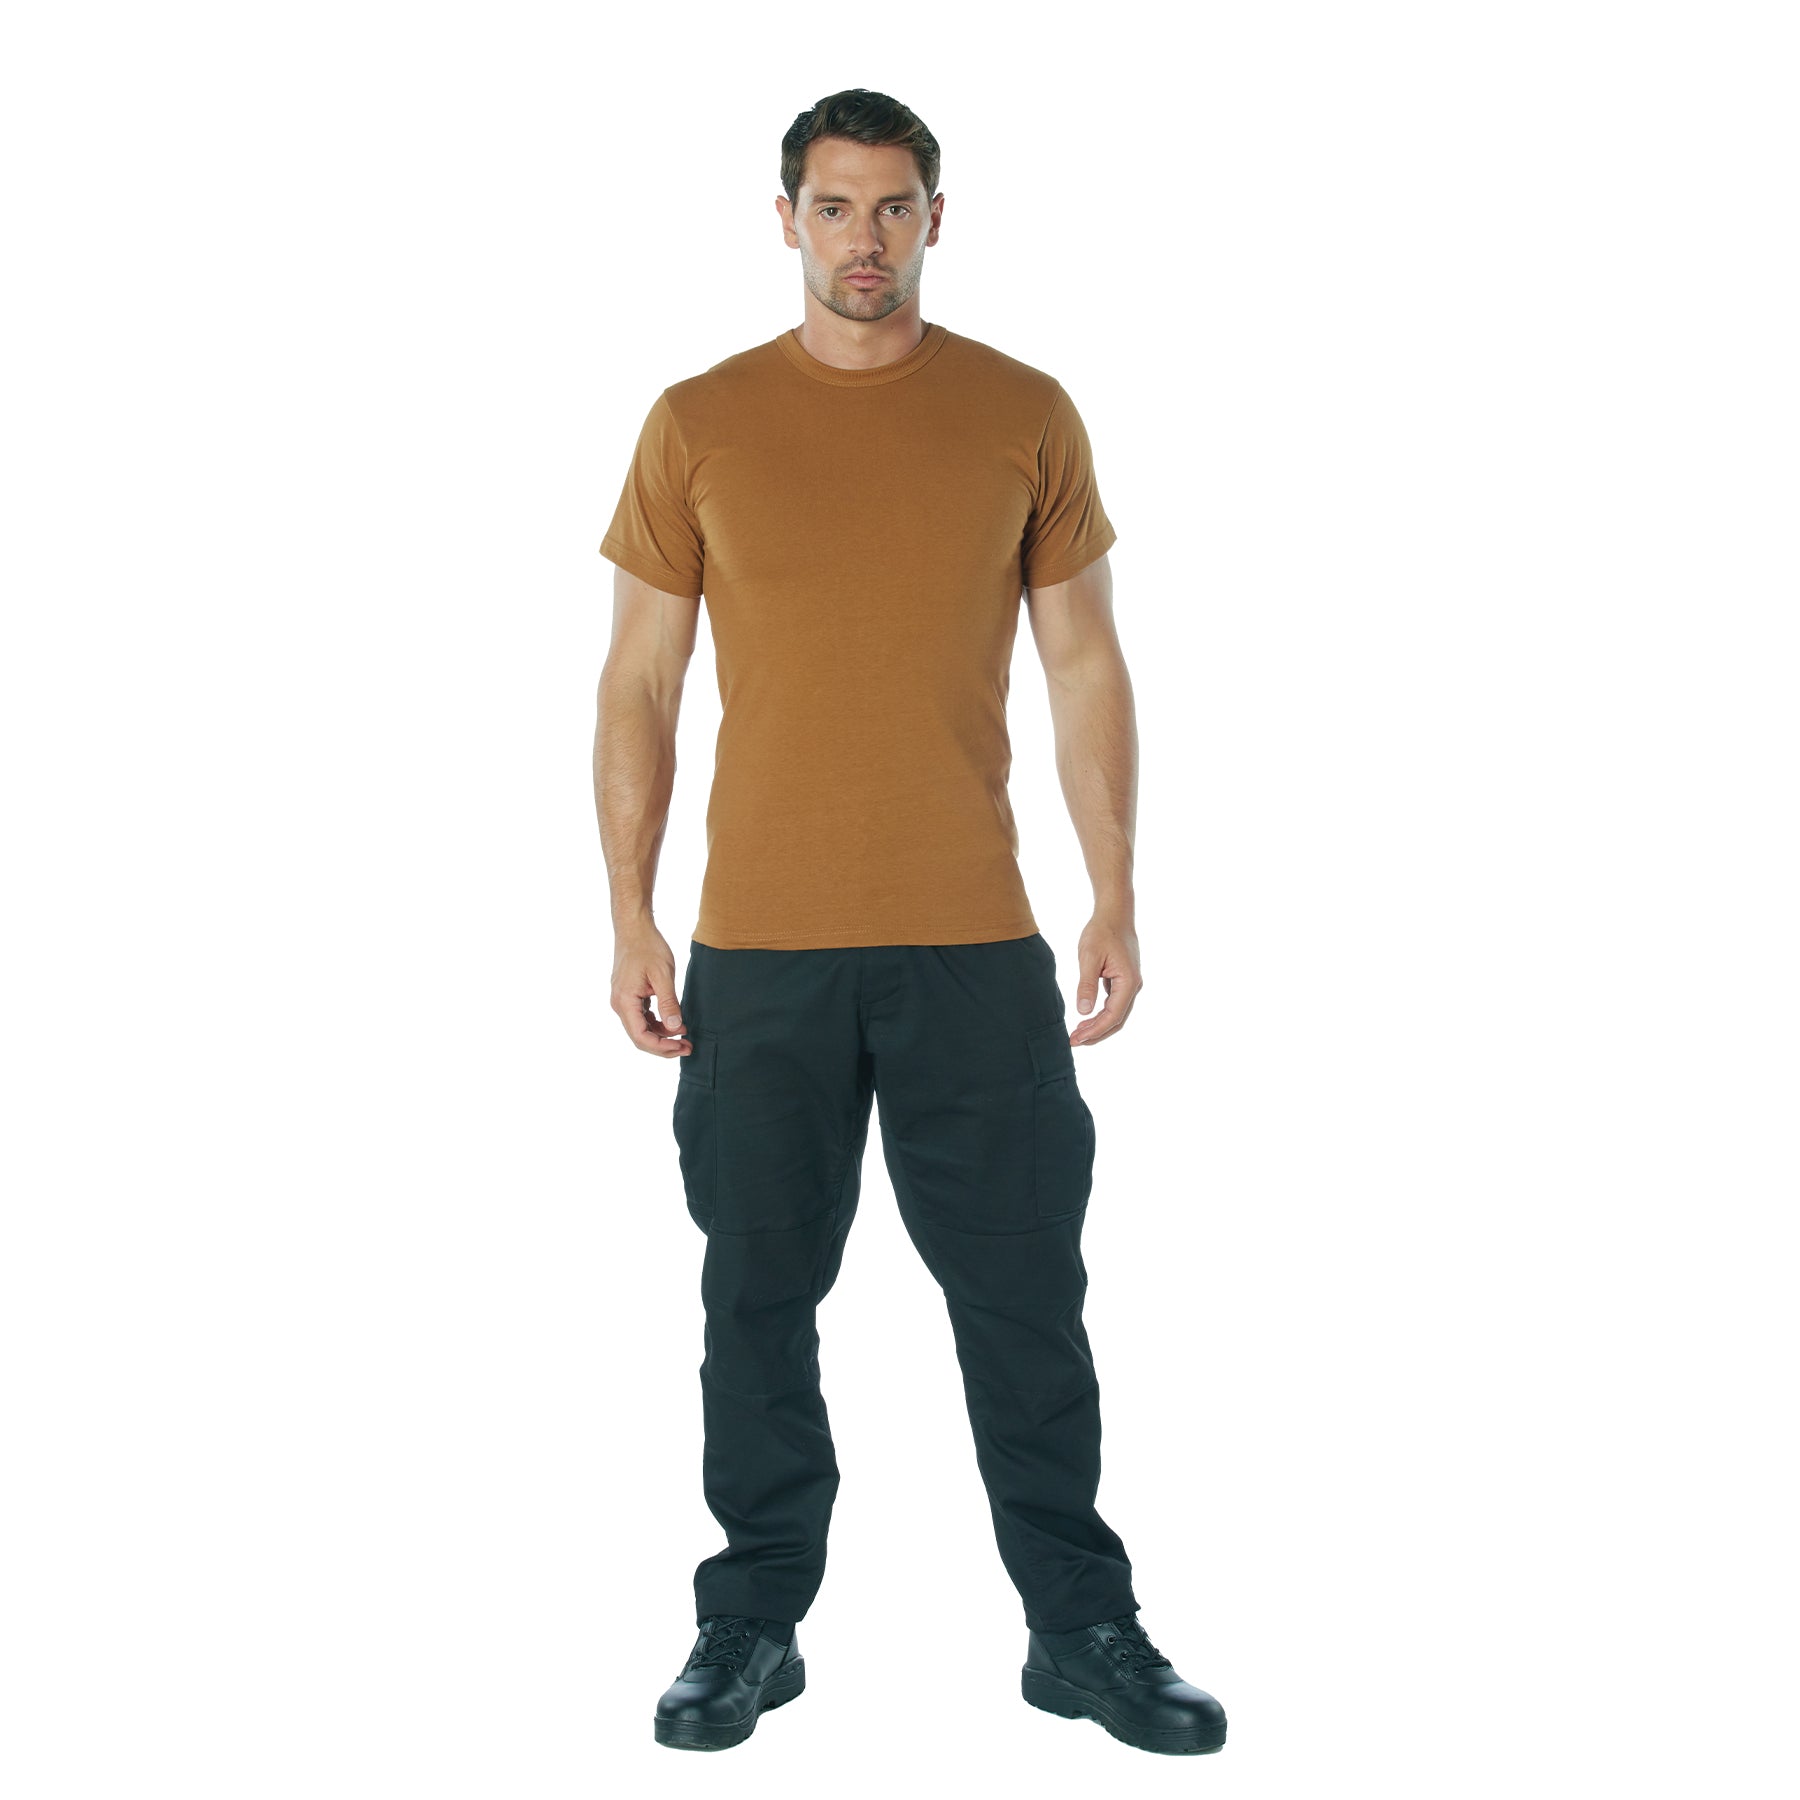 [AR 670-1] Poly/Cotton Heavyweight T-Shirts